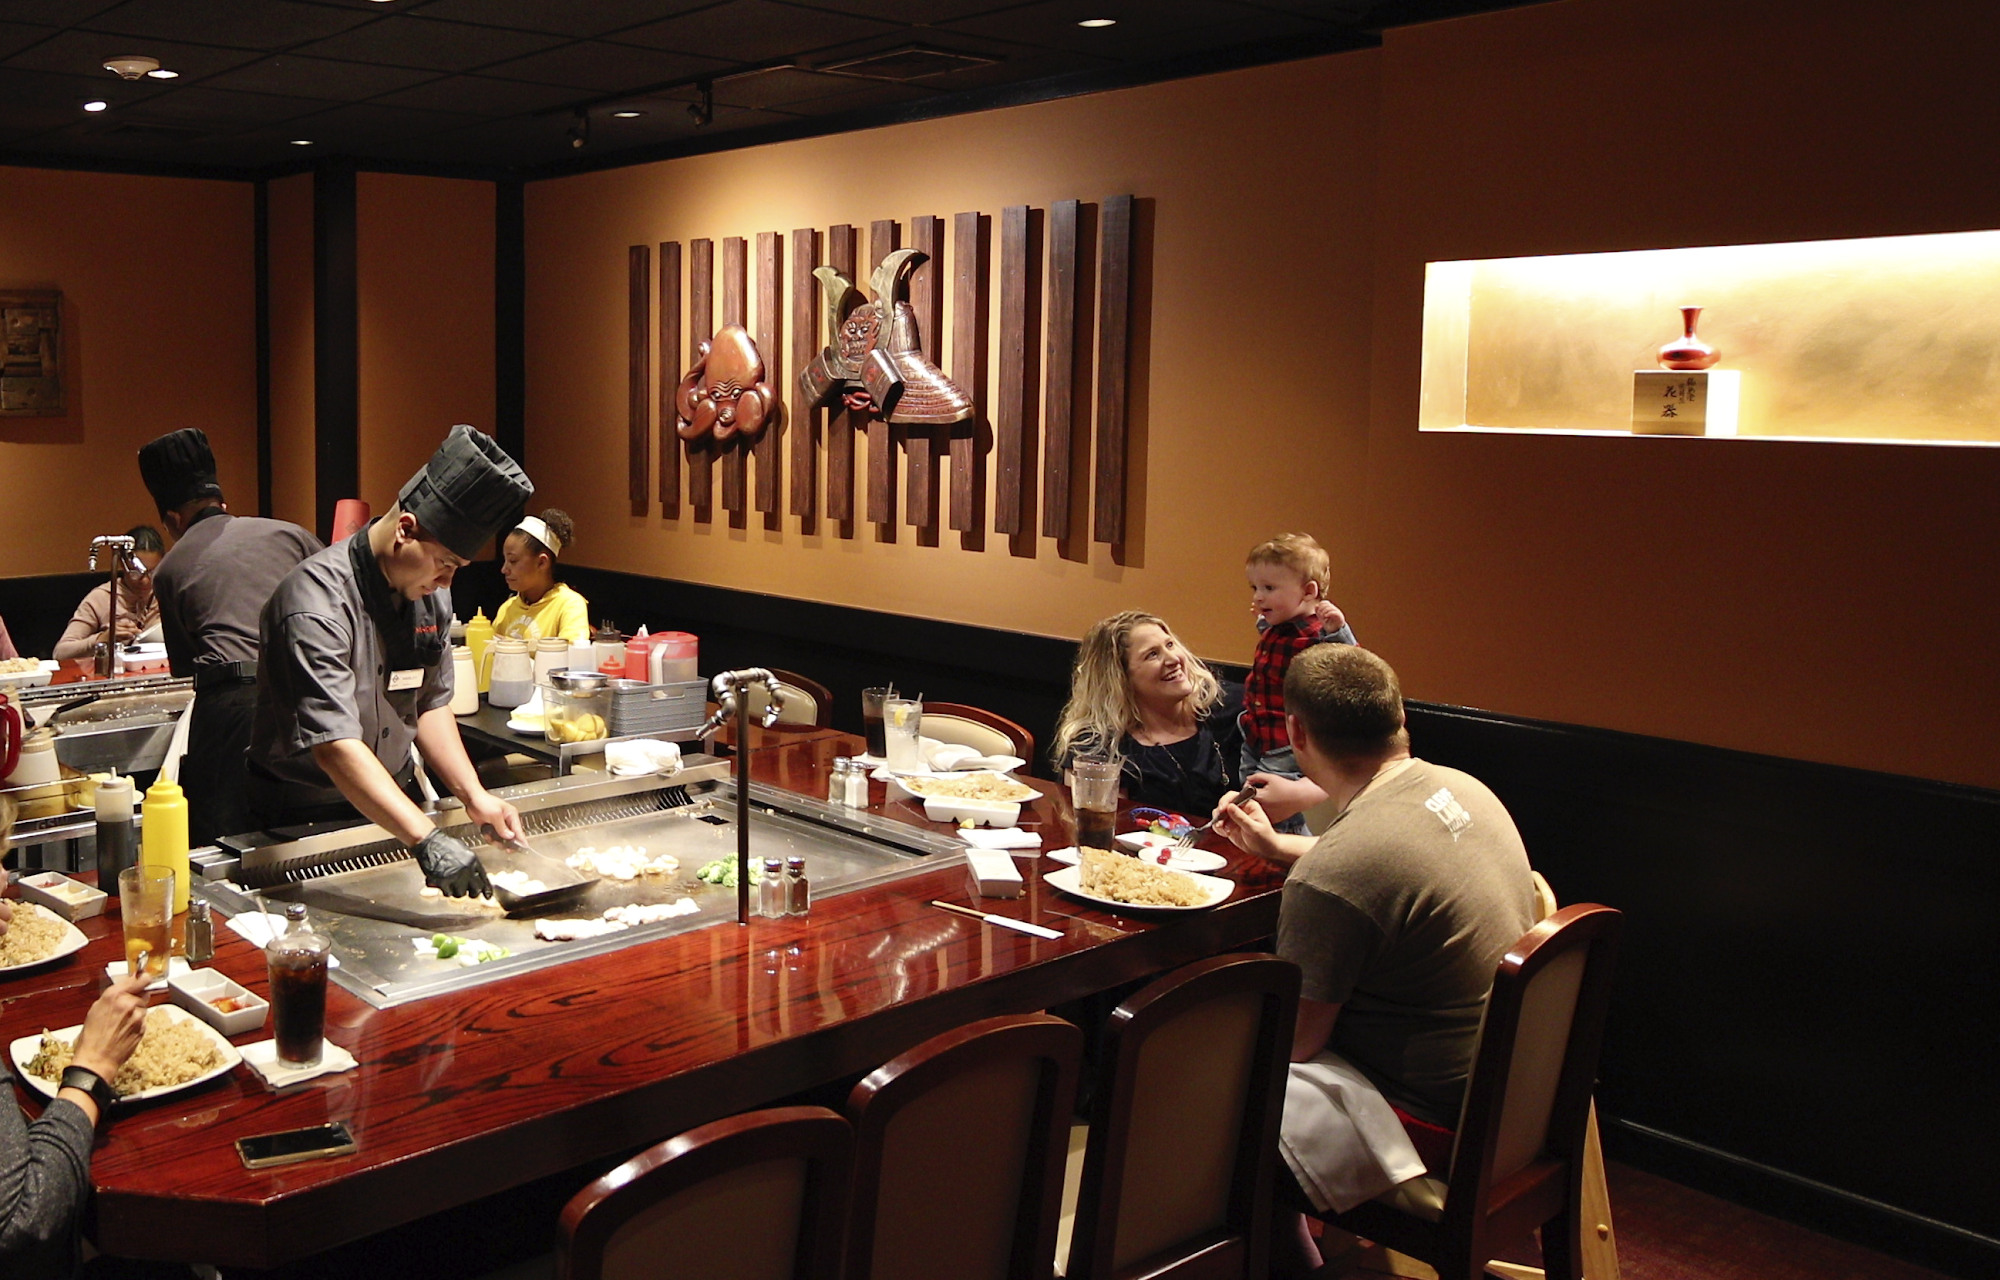 AQUINO'S Japanese Steakhouse and Sushi Bar